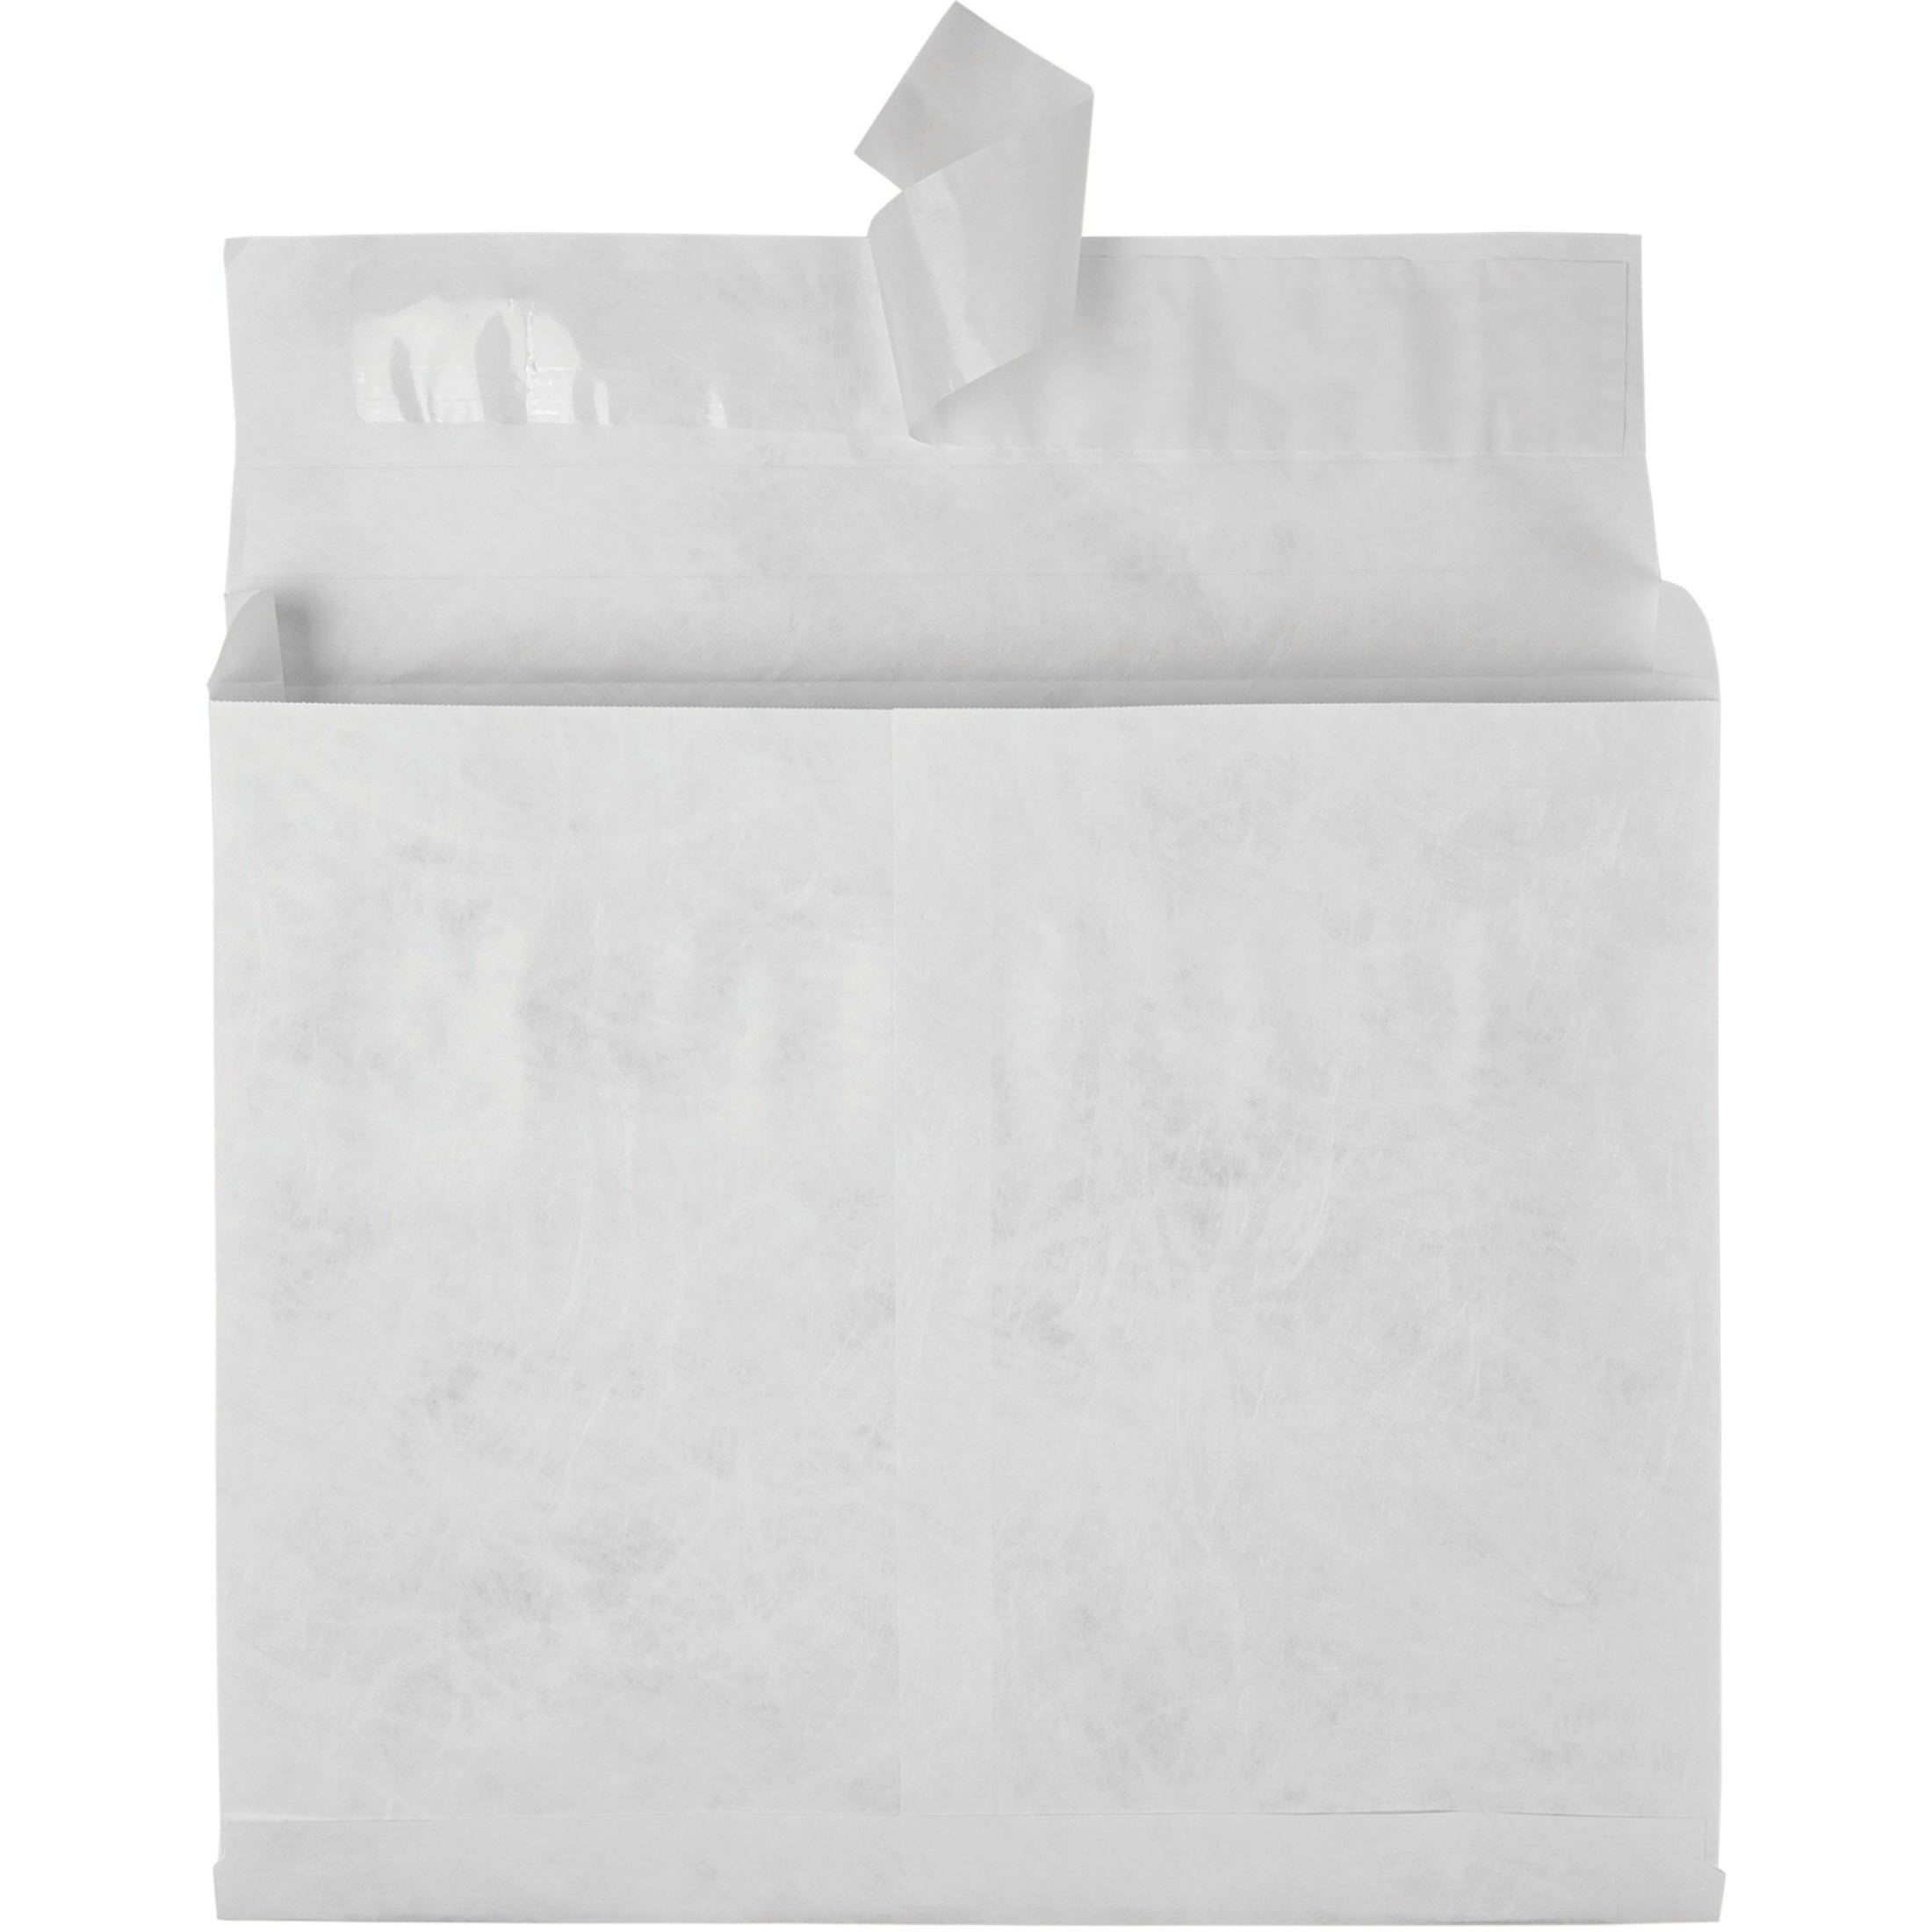 13 x 10 x 2 Pack of 20 RetailSource E131002ET20 Expandable Tyvek Envelopes White 